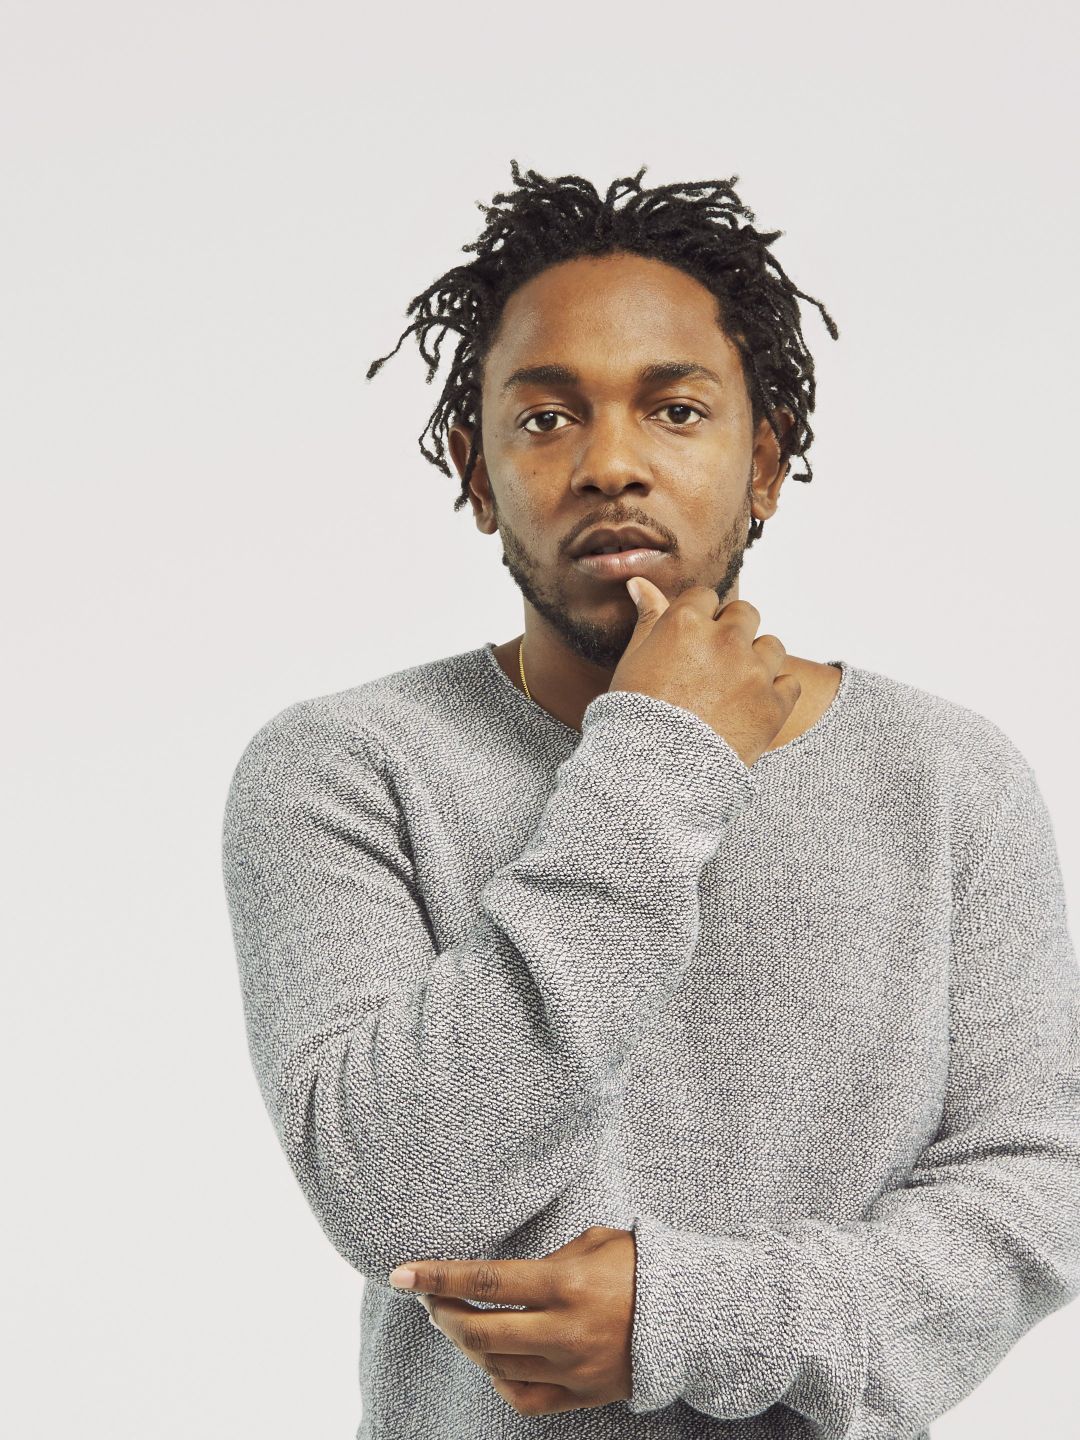 Kendrick Lamar ethnicity